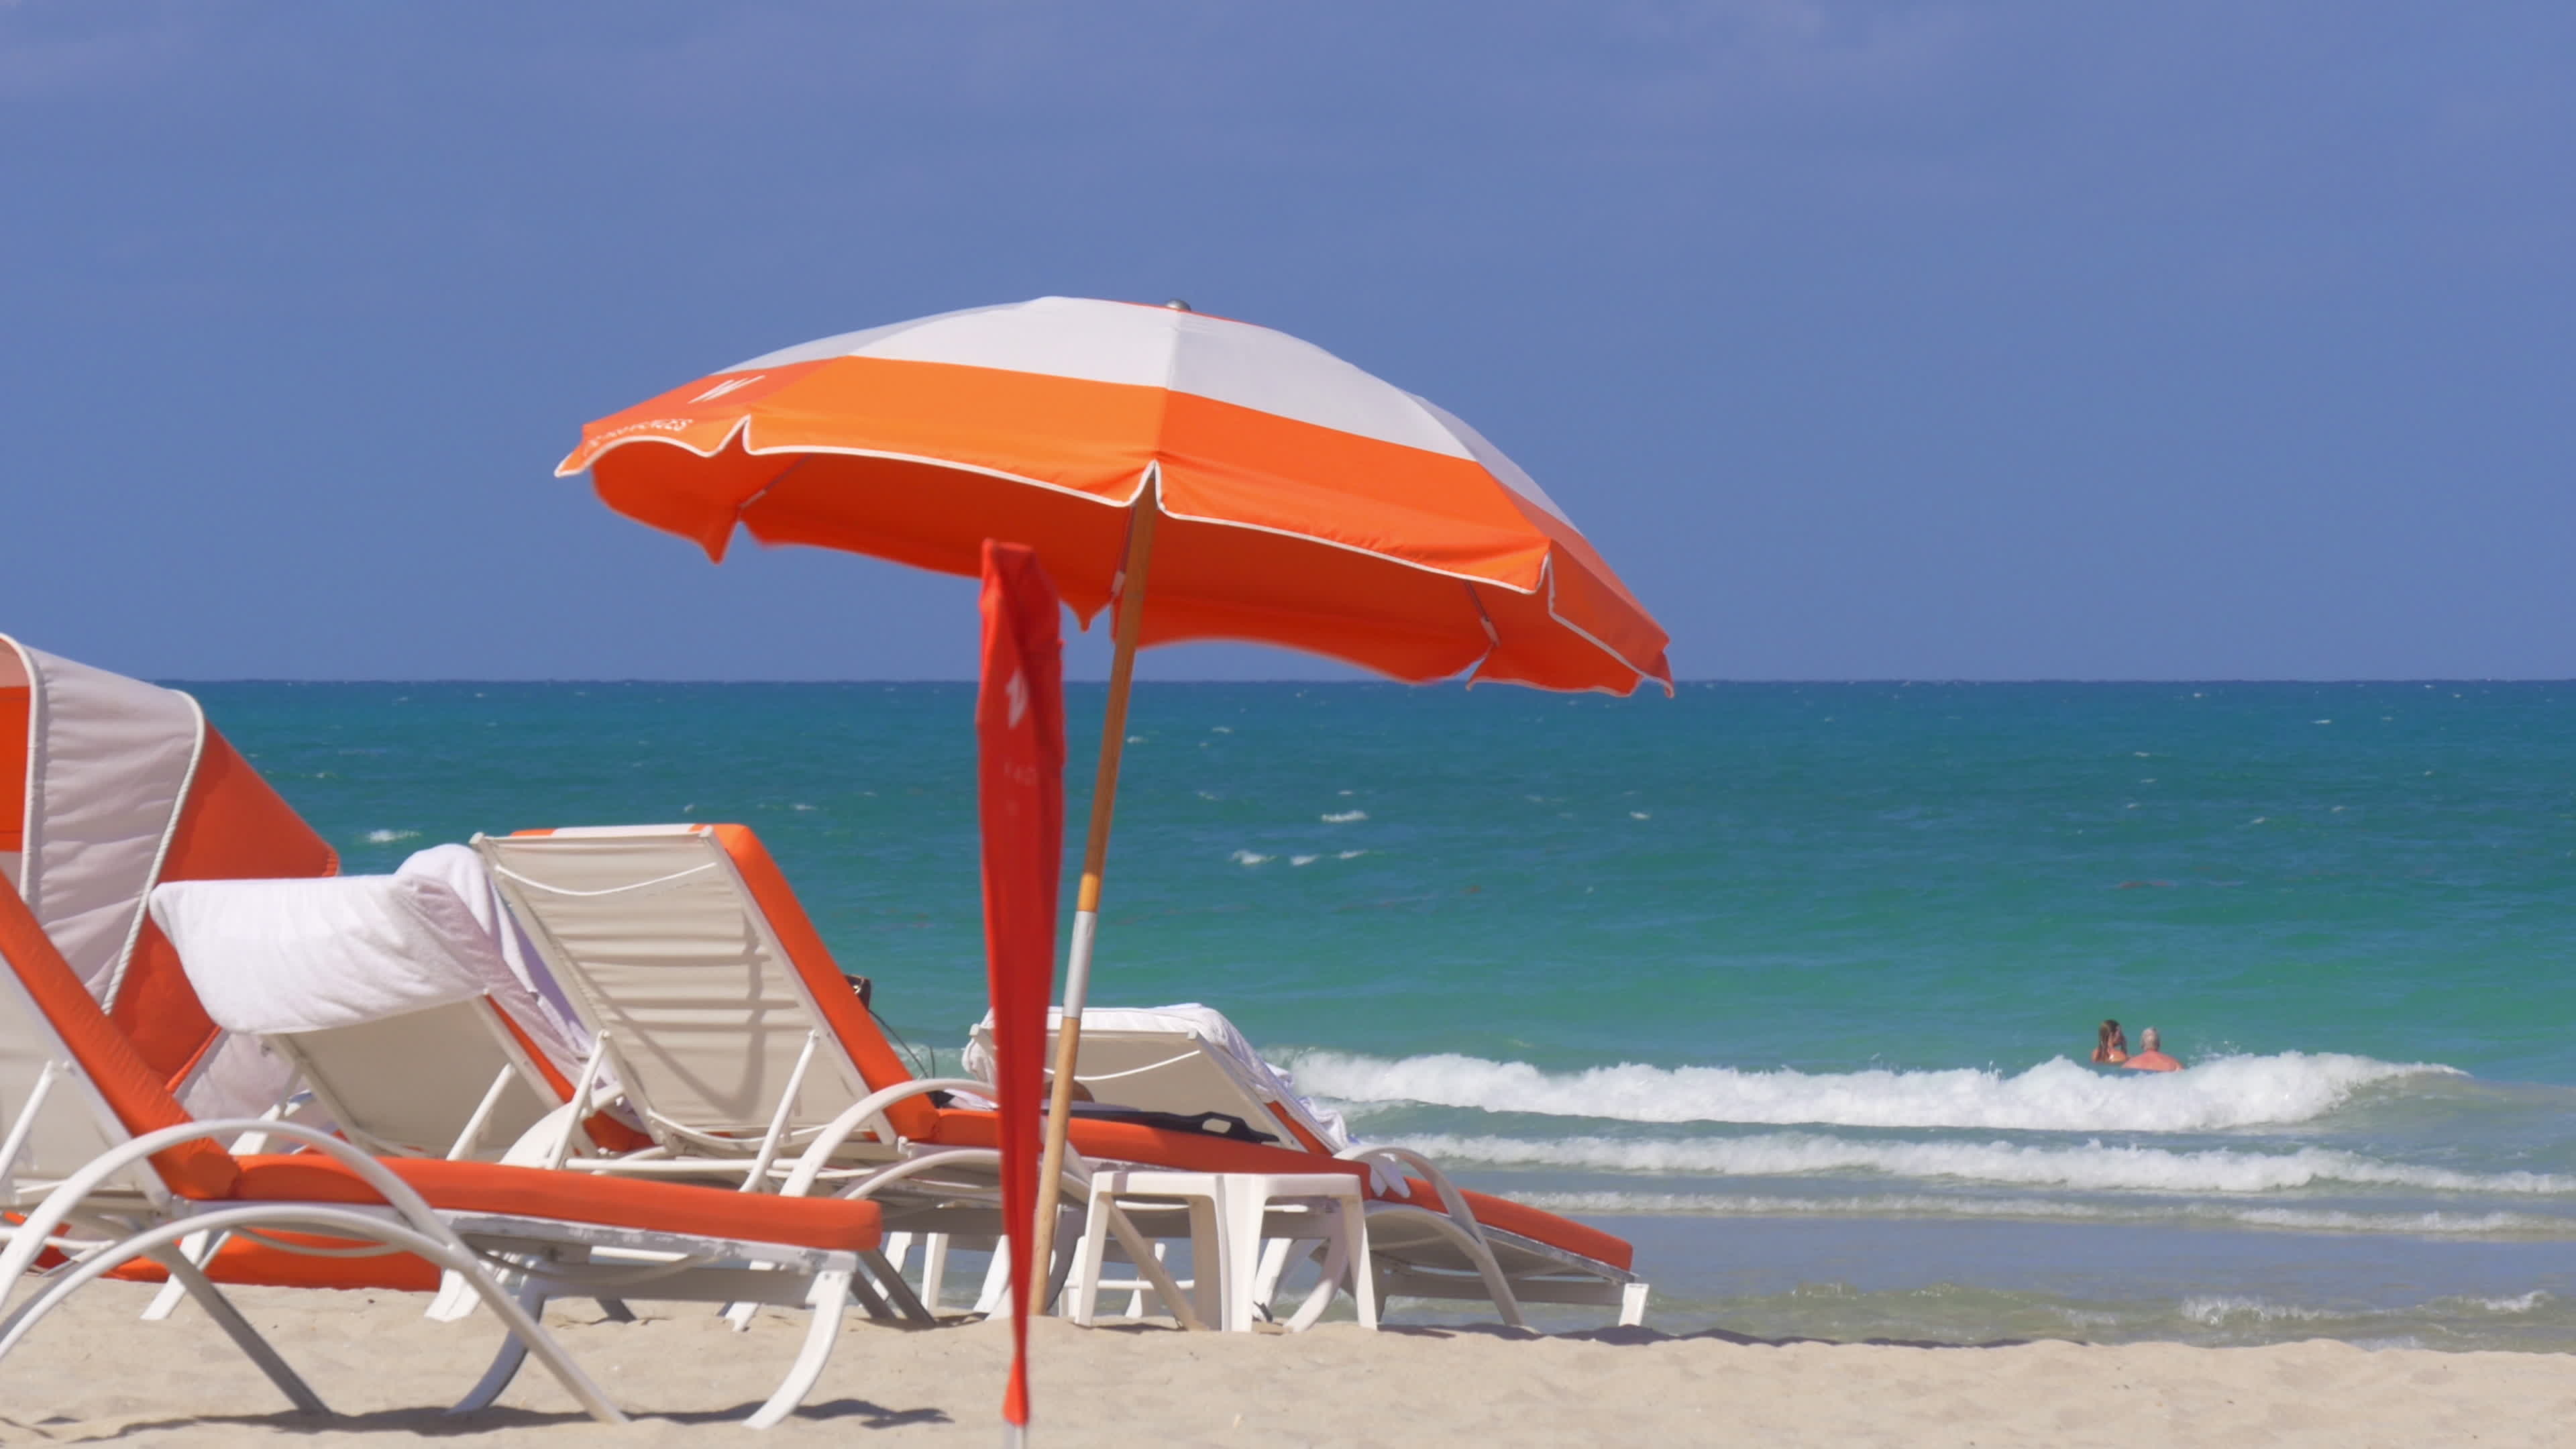 Beach Umbrella: A large device used to provide shade on sunny seashores. 3840x2160 4K Wallpaper.